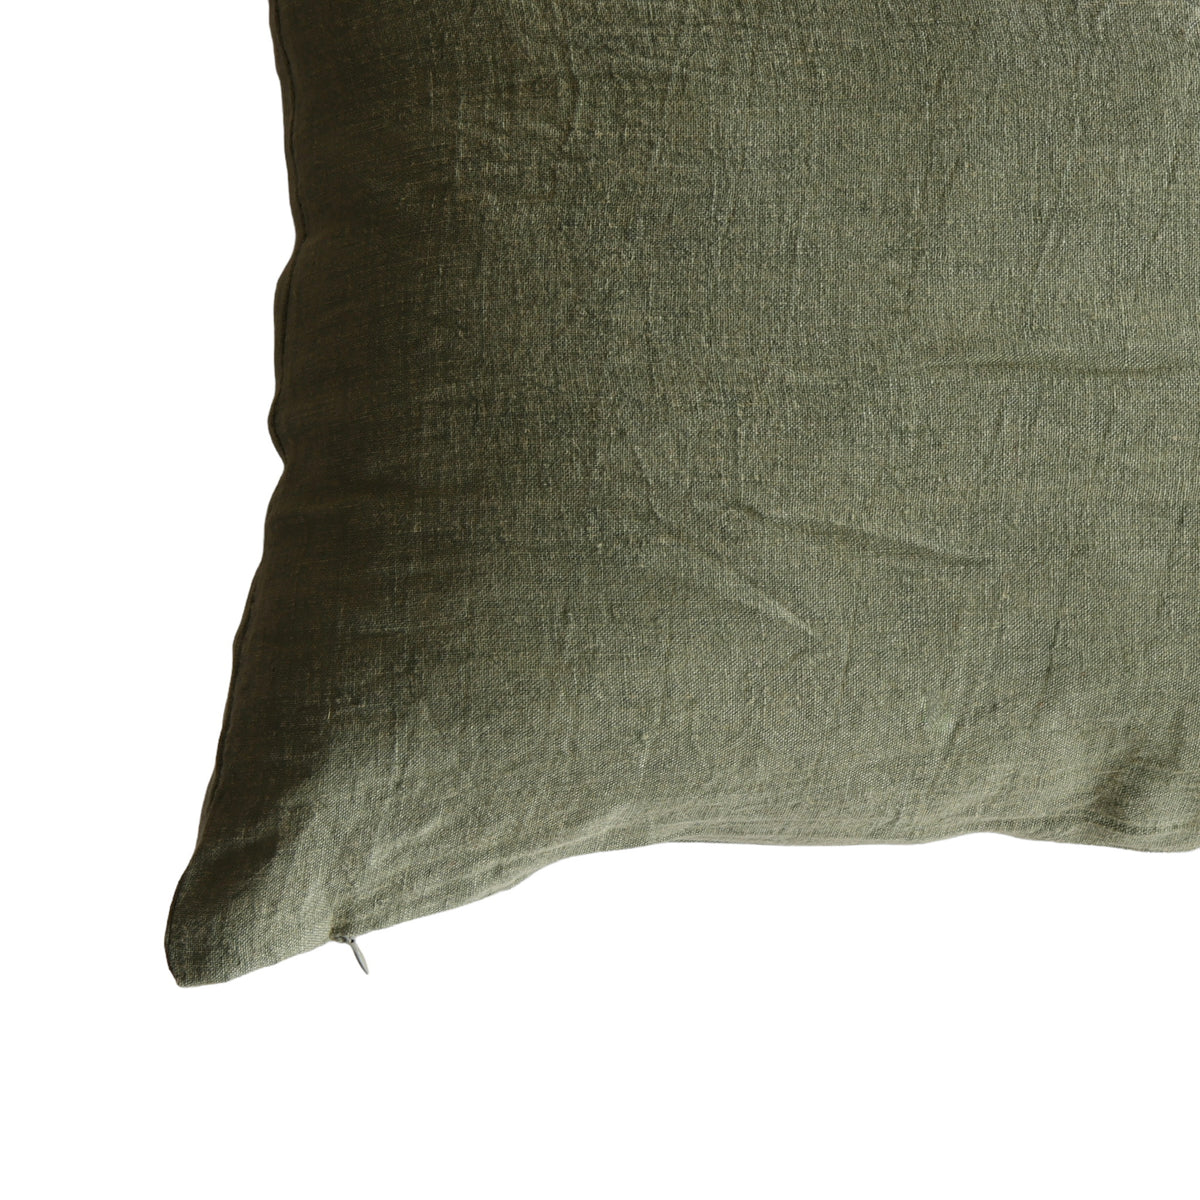 Olive Stonewashed Linen Lumbar Pillow 24x16 - Holistic Habitat 